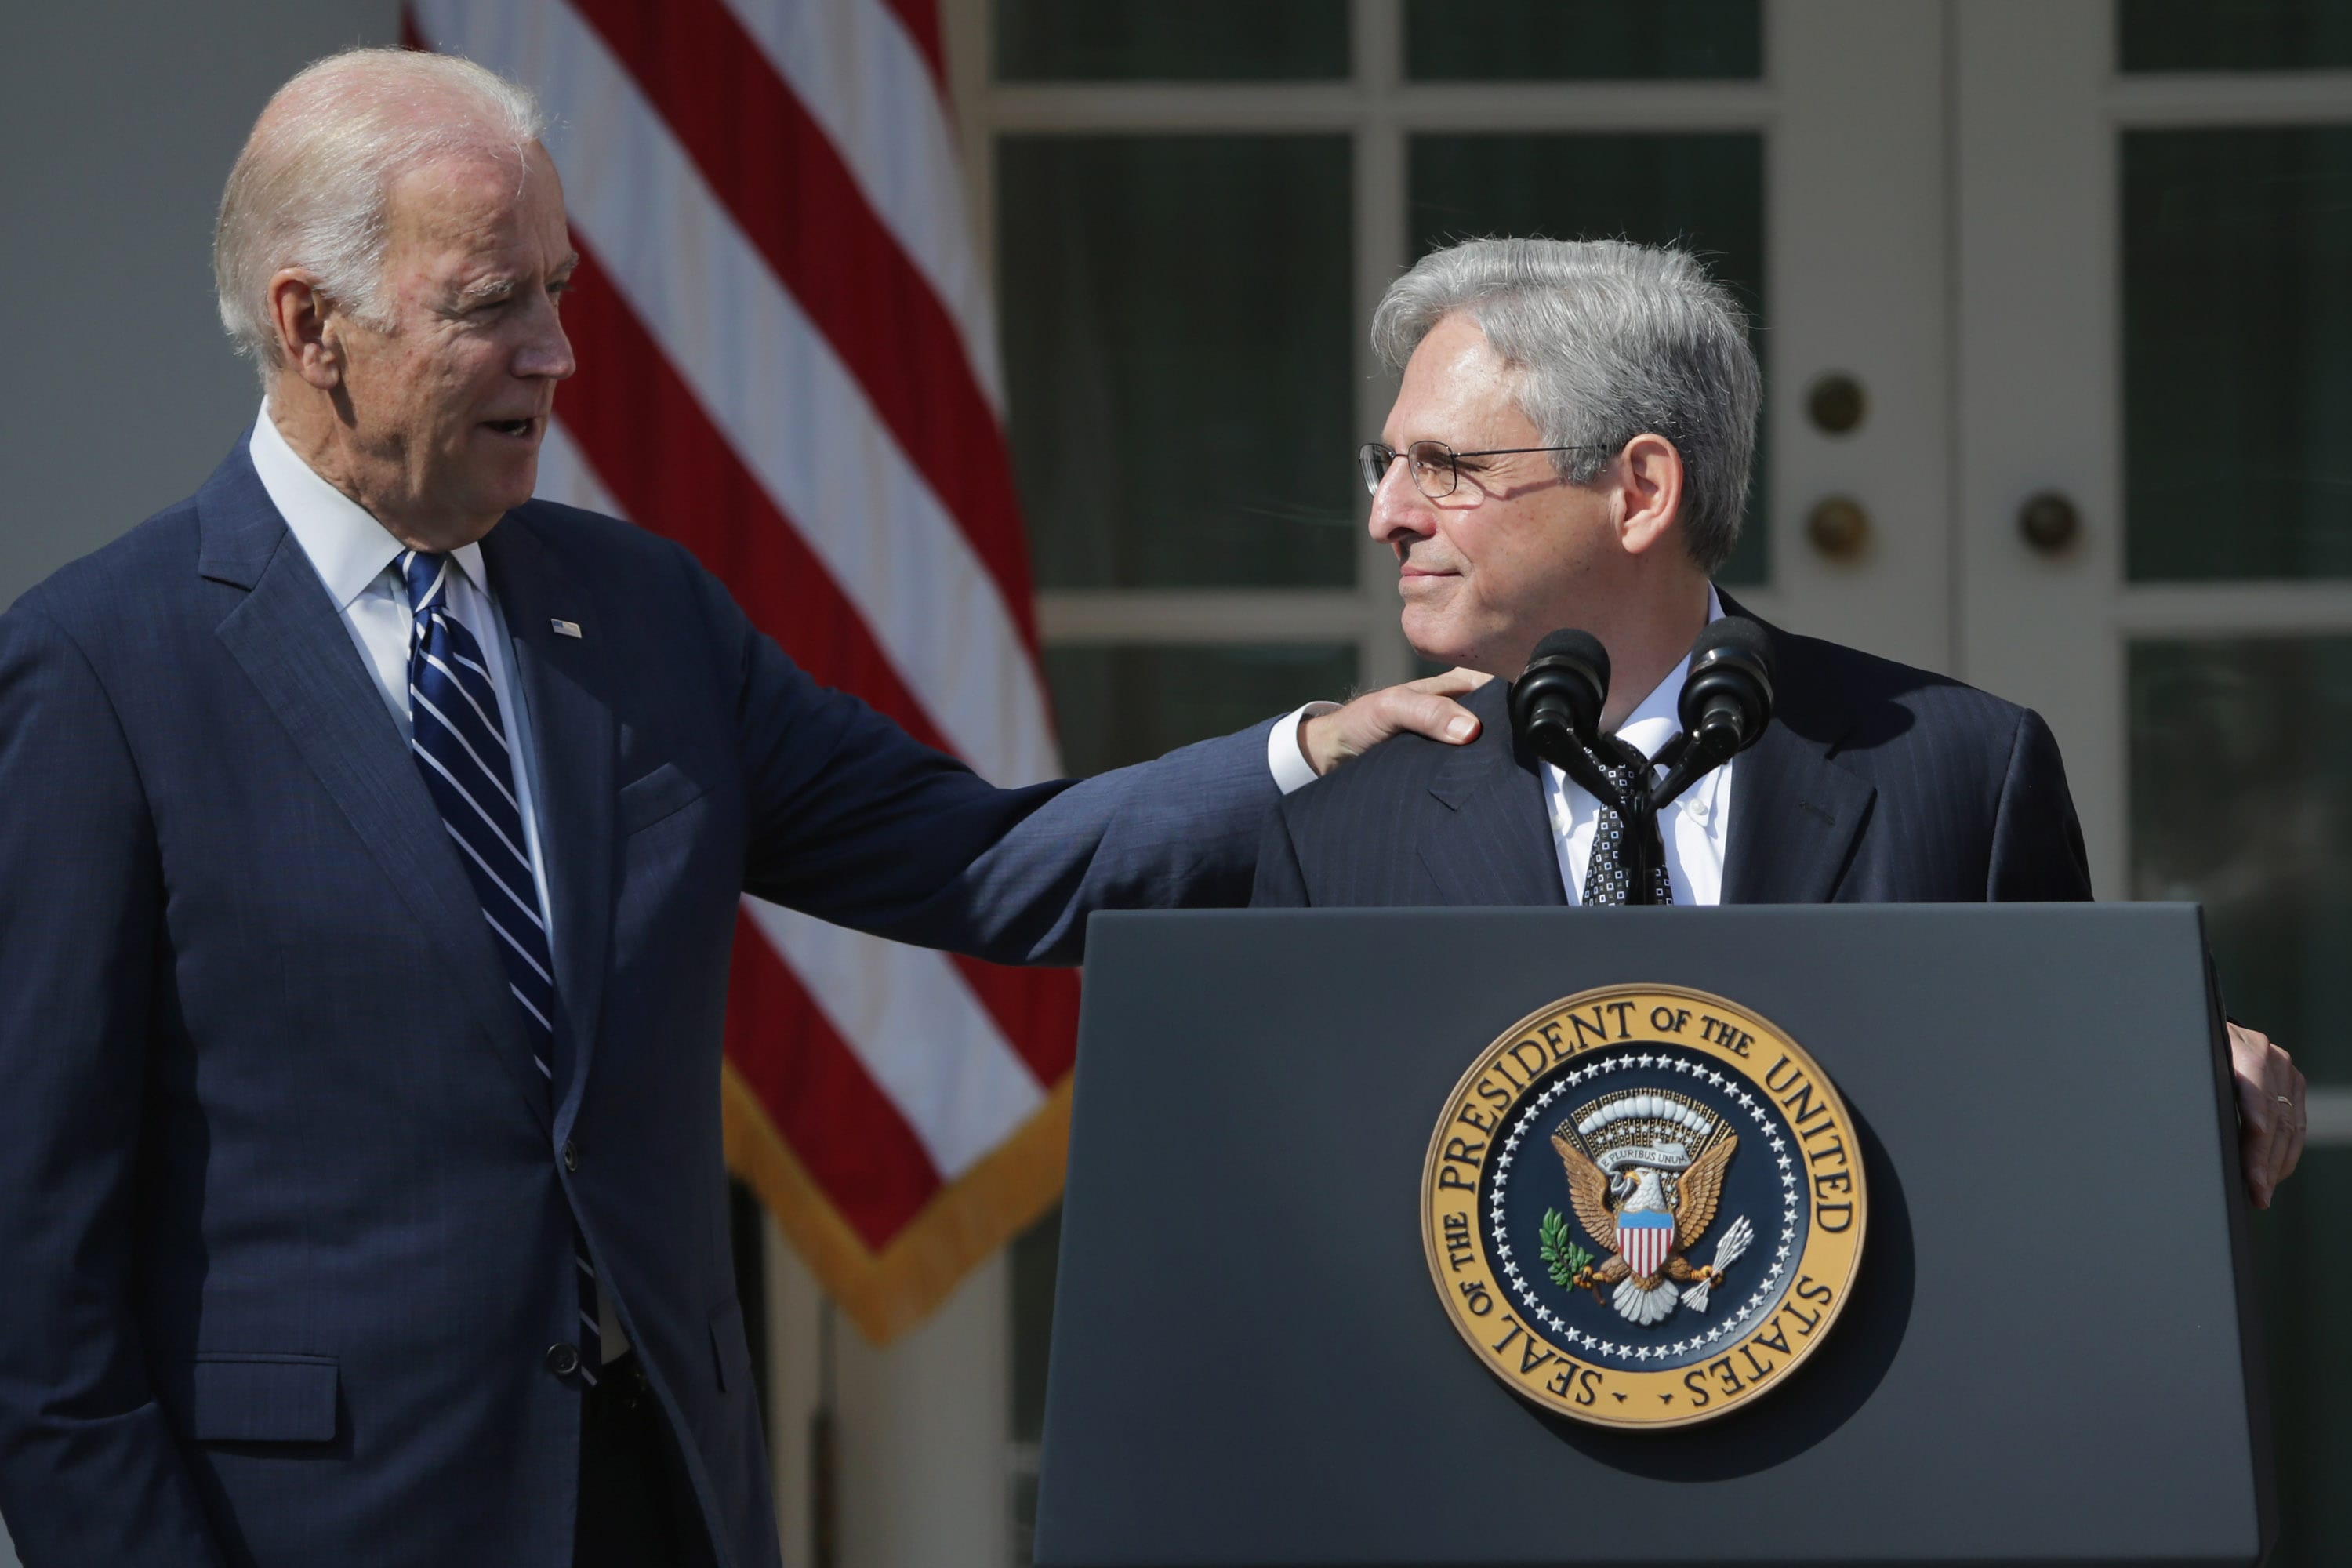 Biden introduces Attorney General Pick Merrick Garland, swears independence from DOJ